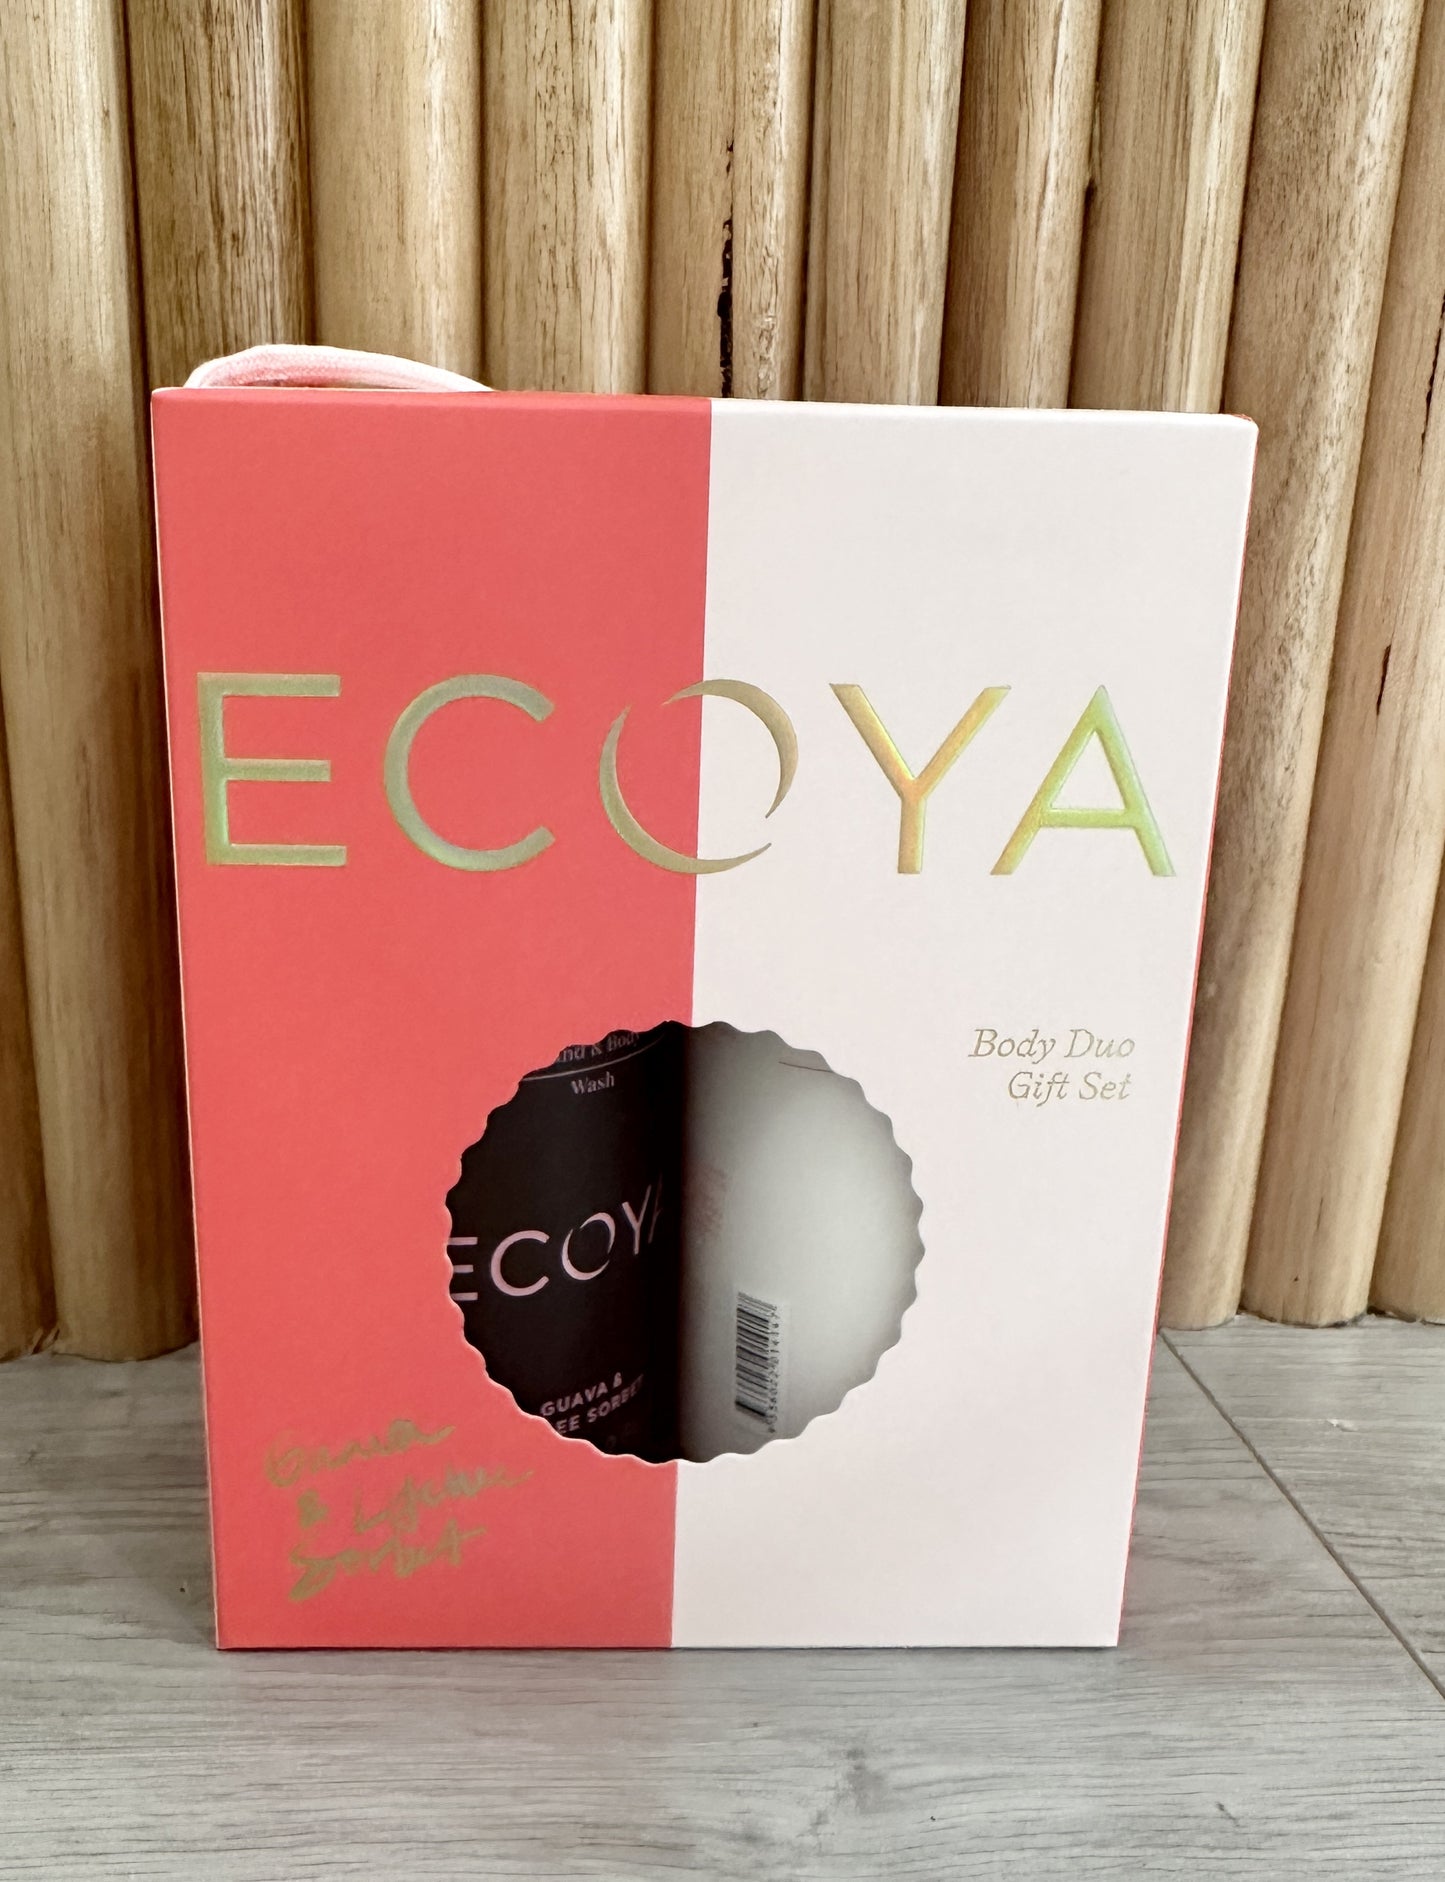 ECOYA Guava & Lychee Sorbet Body duo Gift Set